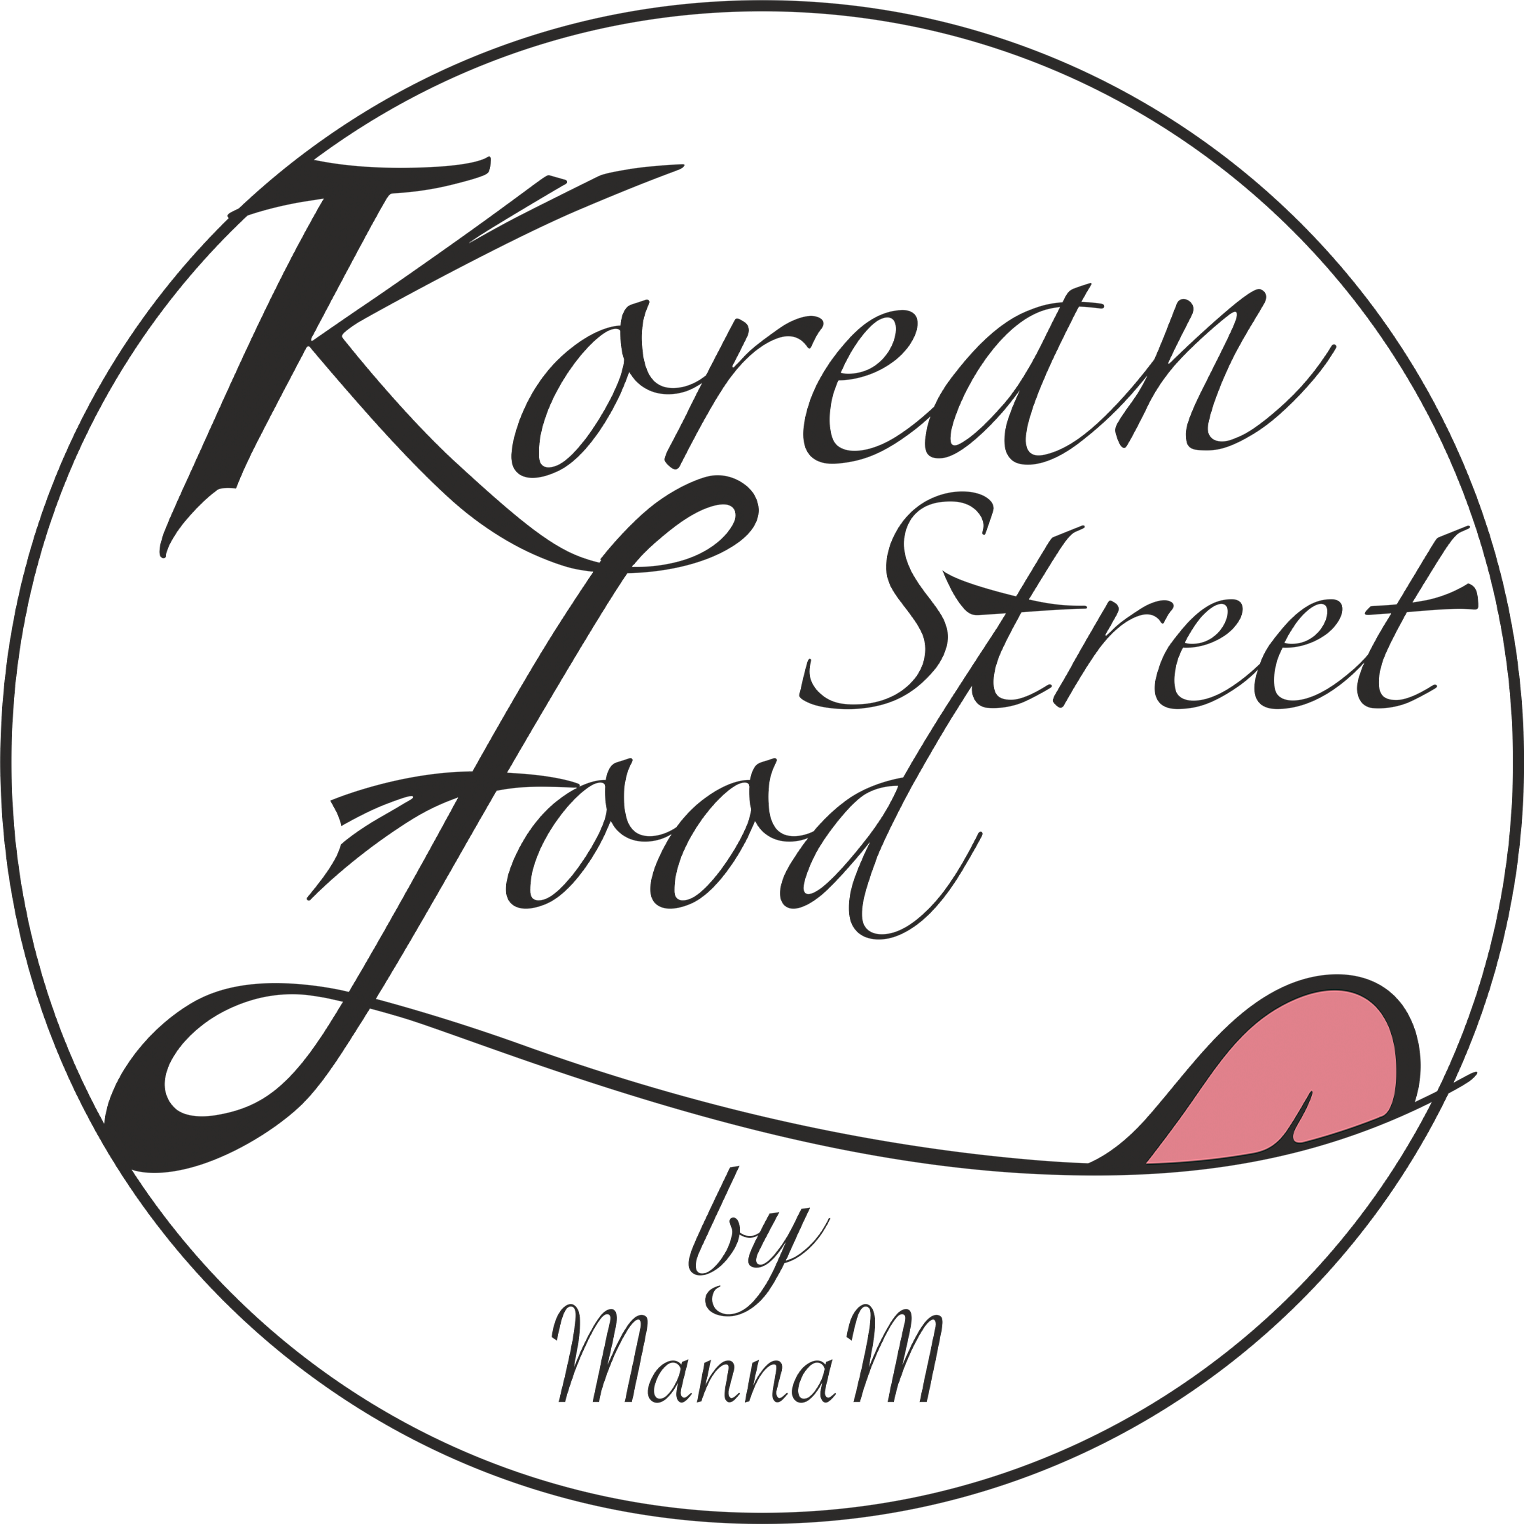 Korean street food by Mannam